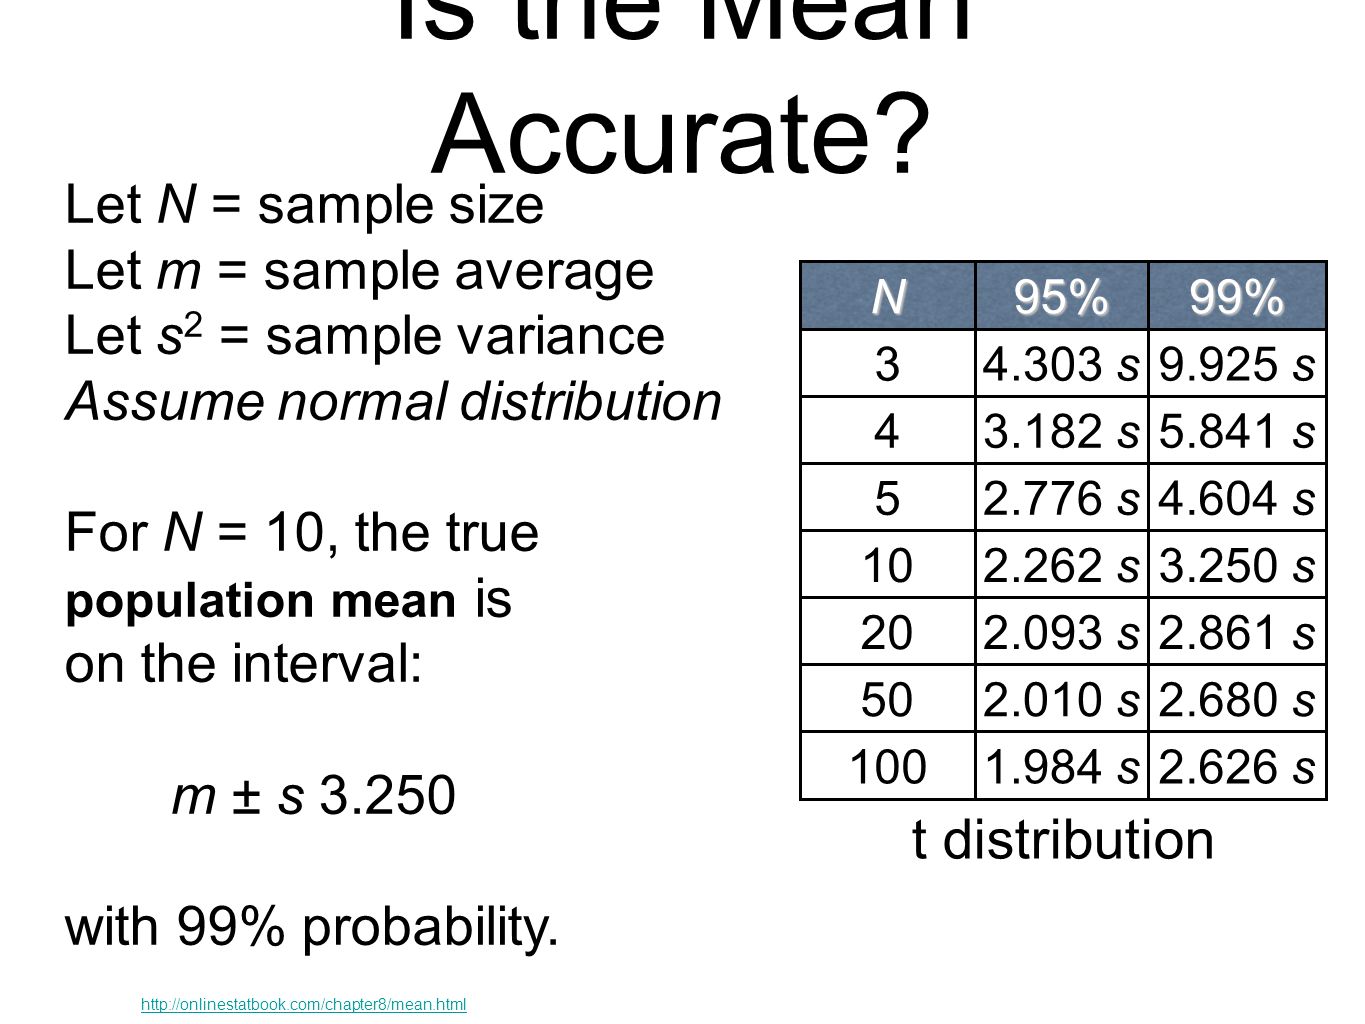 Is the Mean Accurate N95%99% s9.925 s s5.841 s s4.604 s s3.250 s s2.861 s s2.680 s s2.626 s t distribution Let N = sample size Let m = sample average Let s 2 = sample variance Assume normal distribution For N = 10, the true population mean is on the interval: m ± s with 99% probability.